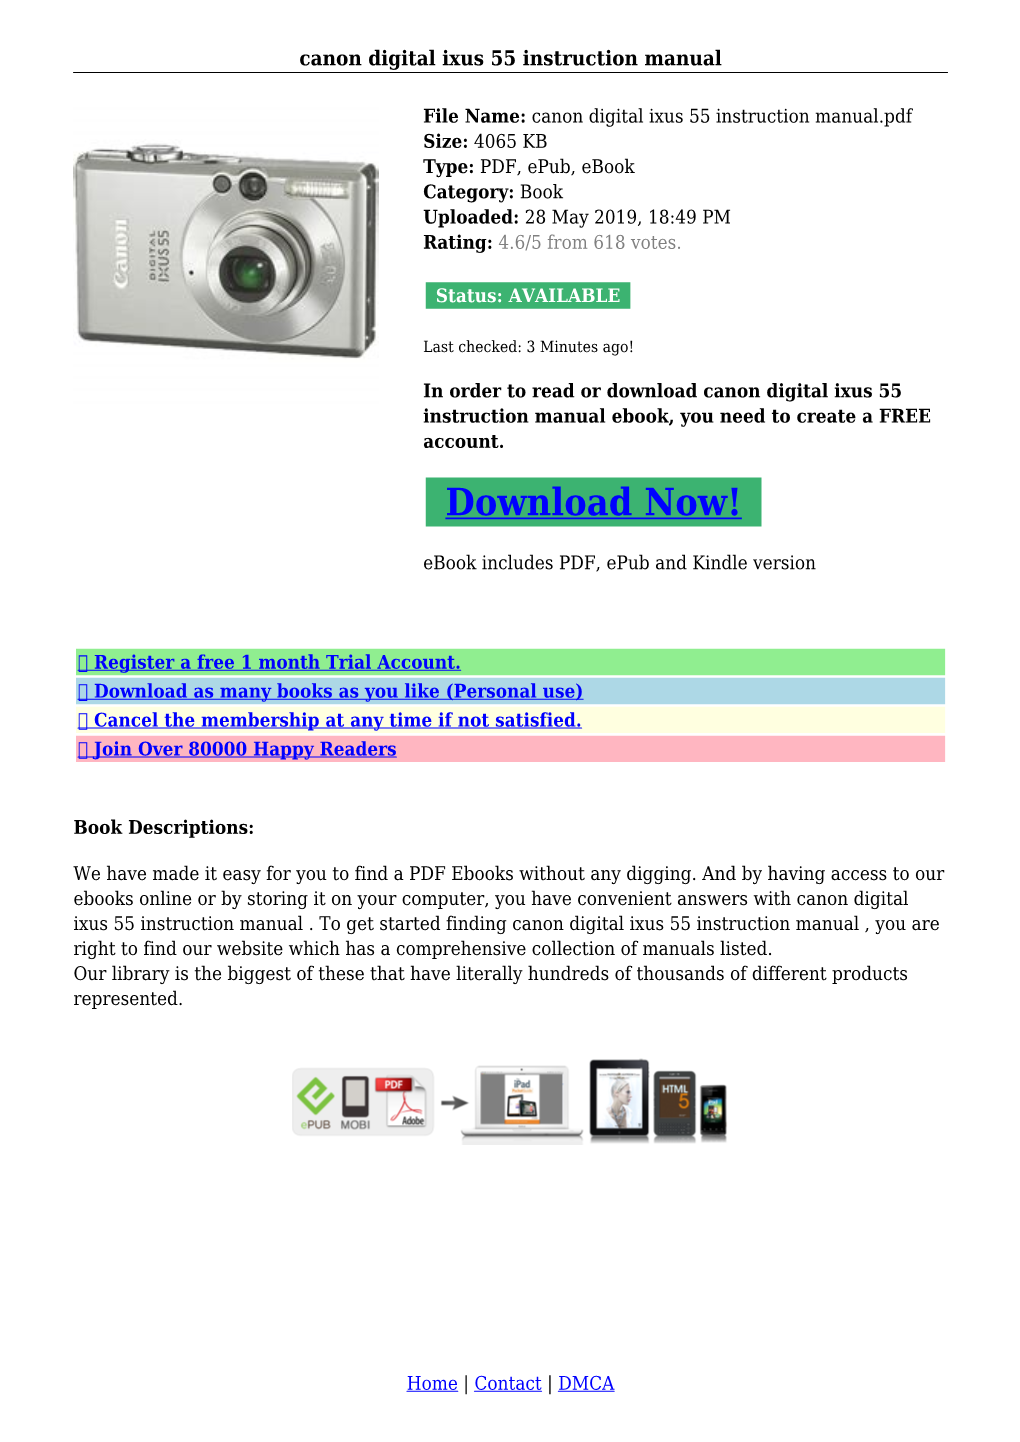 Canon Digital Ixus 55 Instruction Manual